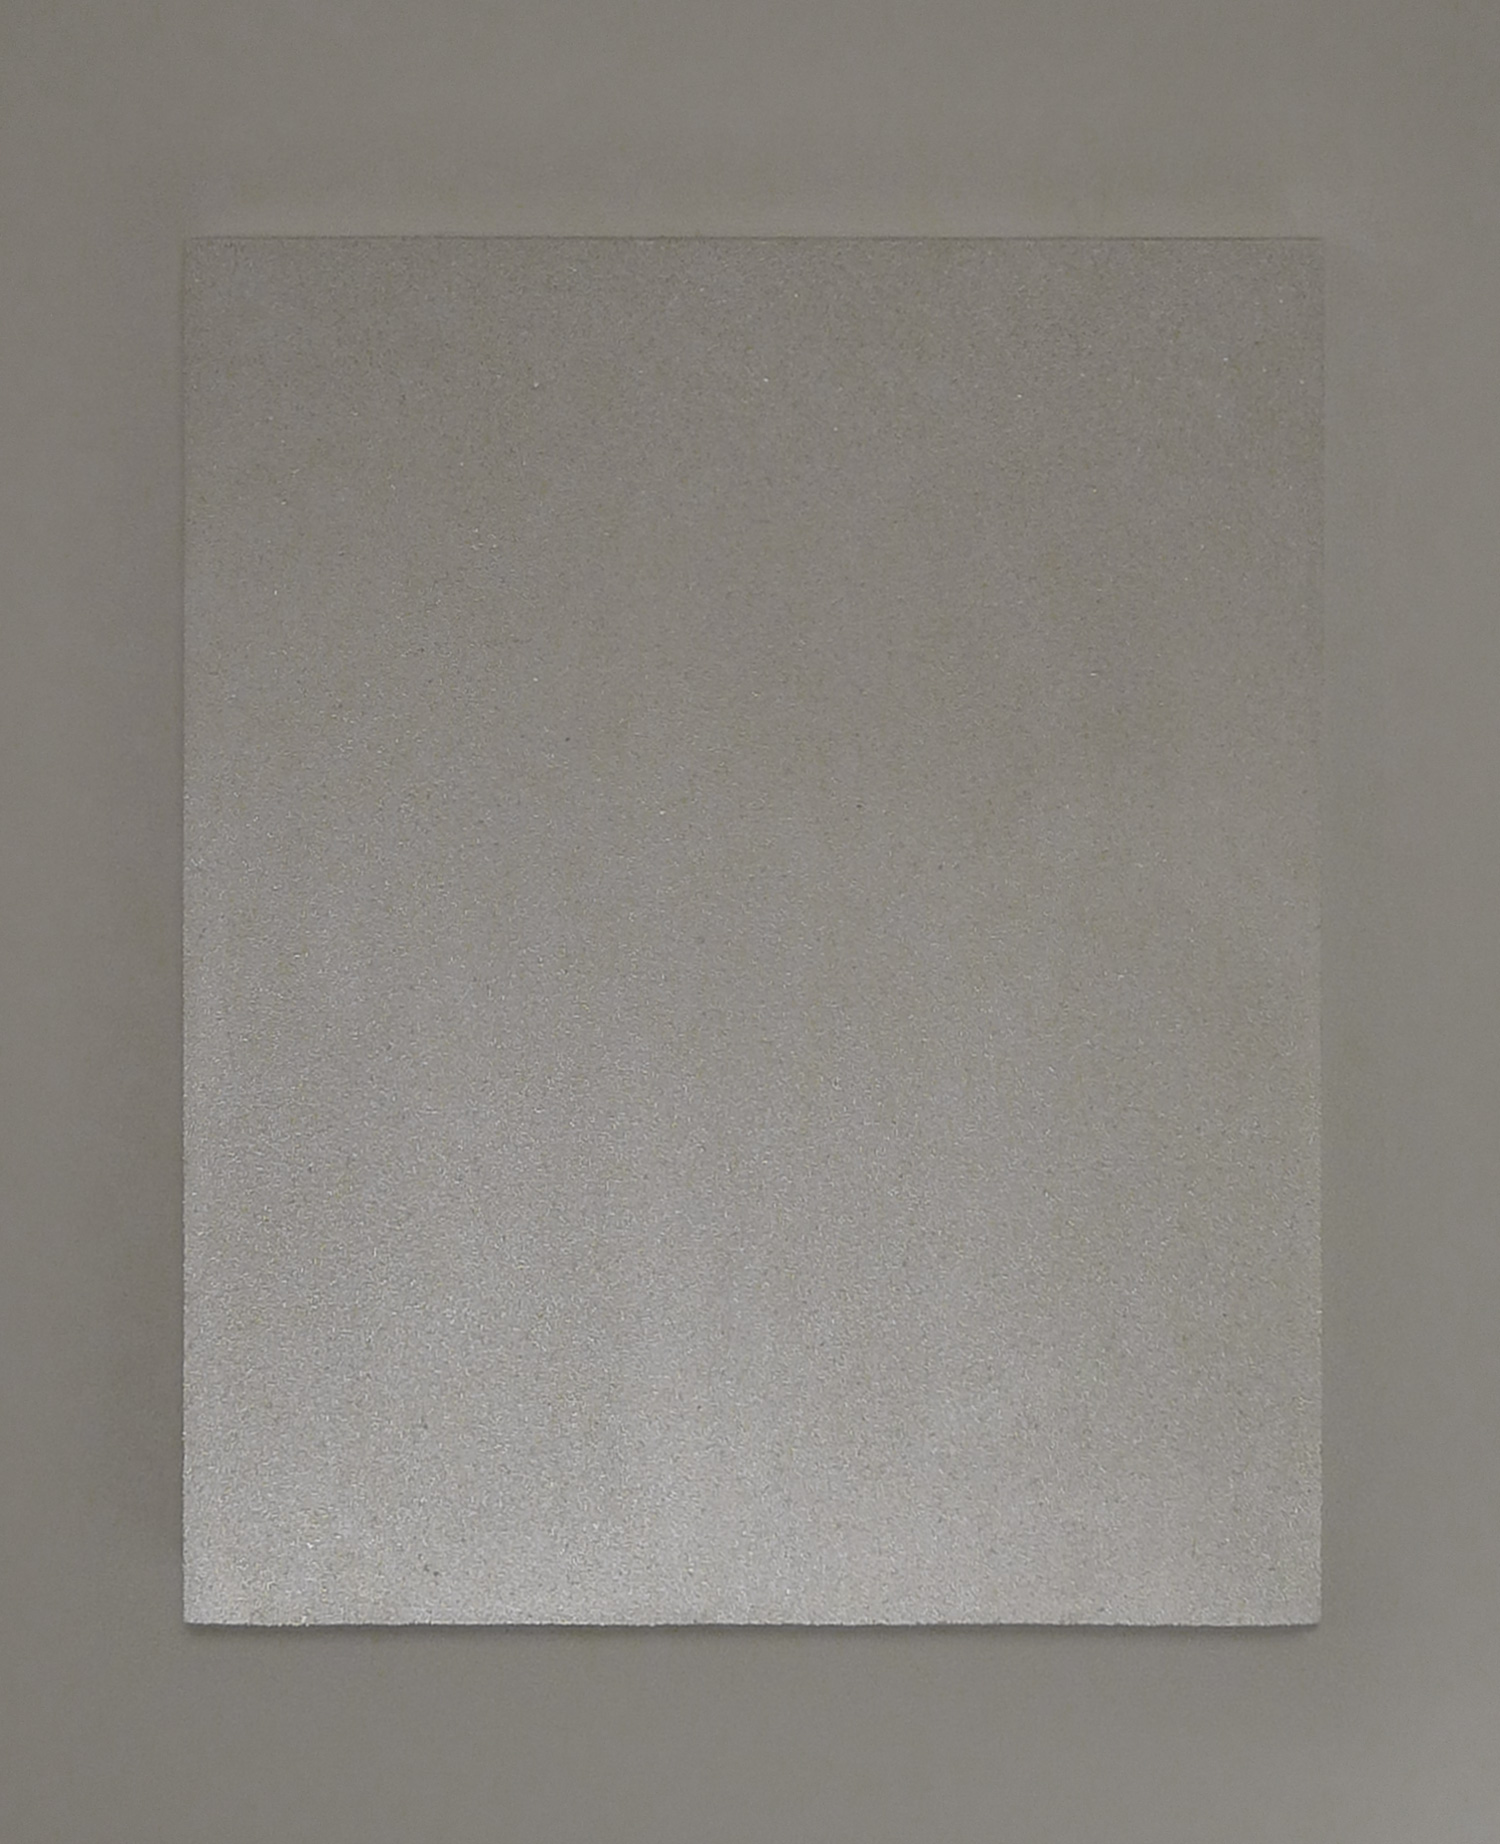 White-glass-painting-1-Buckley-72dpi-1500px-web.jpg